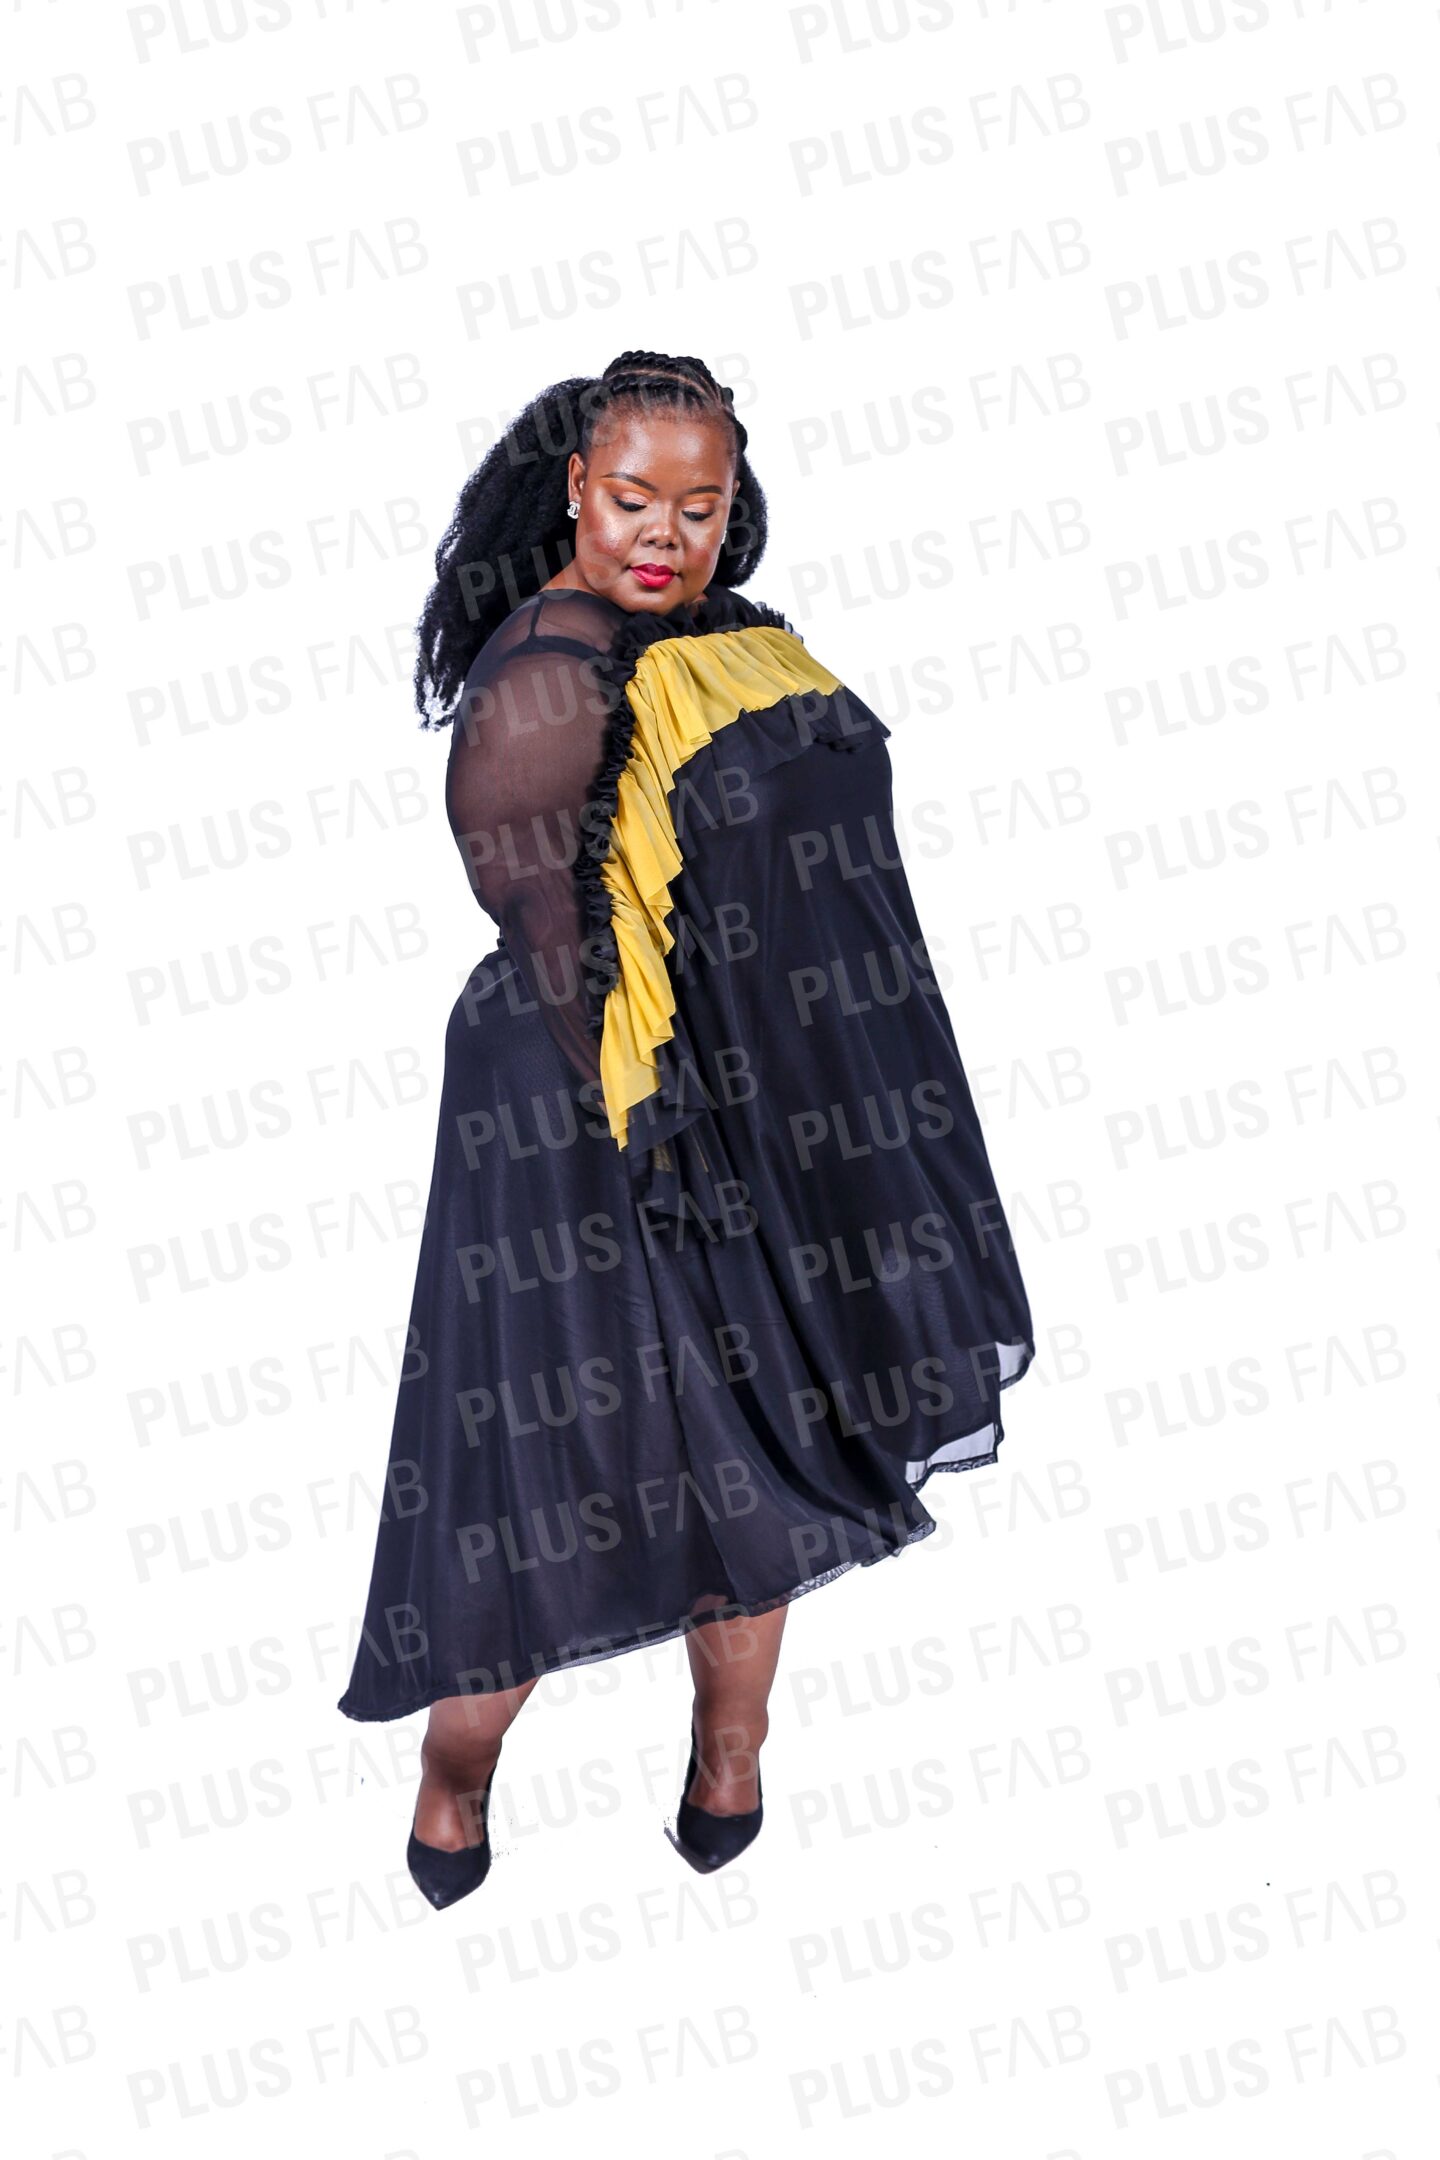 Loyiso Dress - plusfab